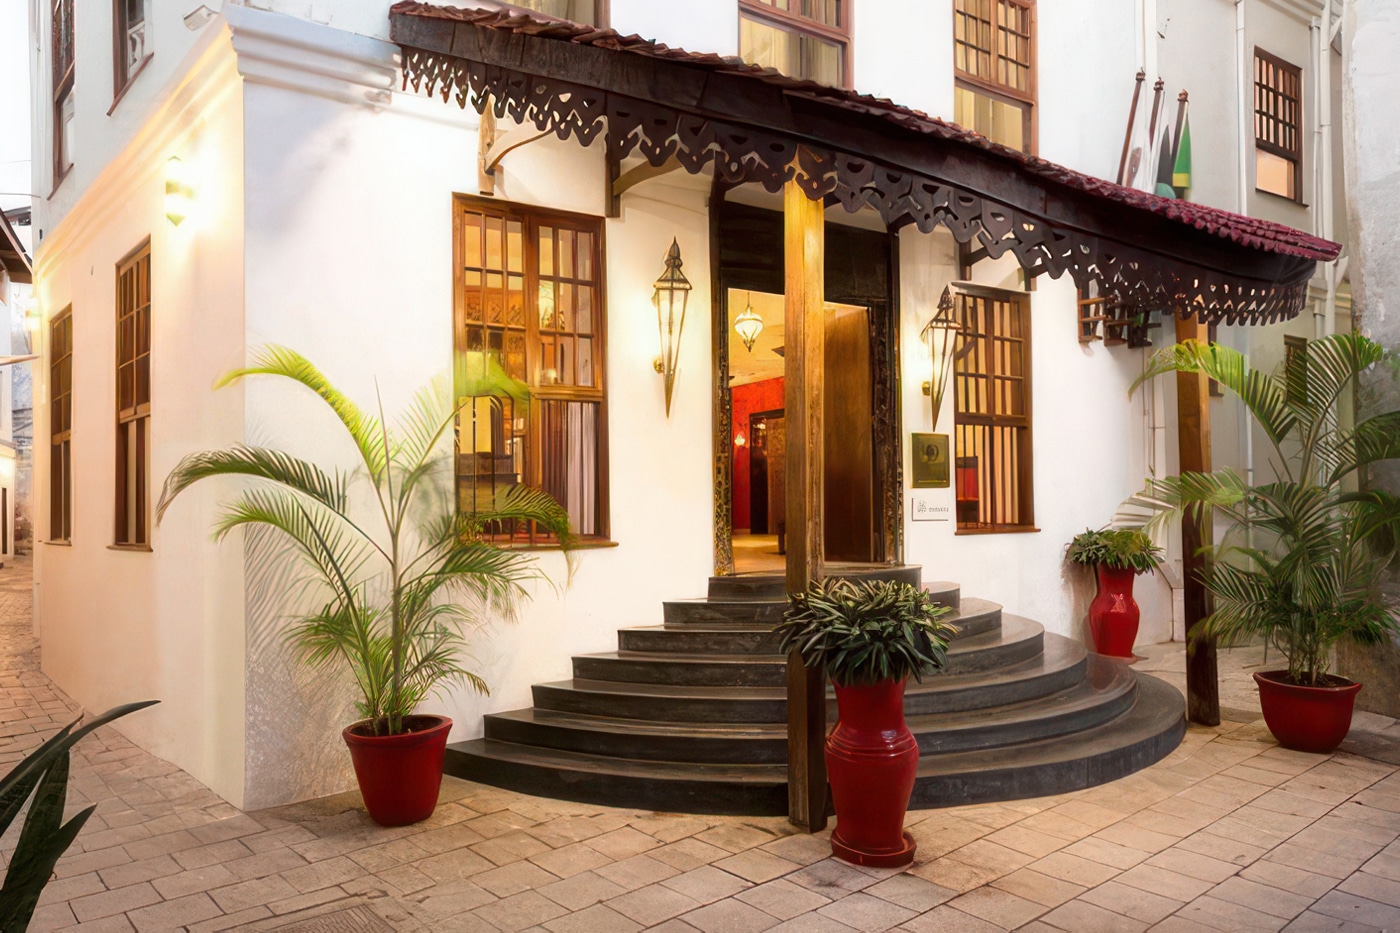 Doubletree by Hilton hotel Zanzibar Stone Town - accommodatie in Stone Town - gemakkelijk reizen Tanzania